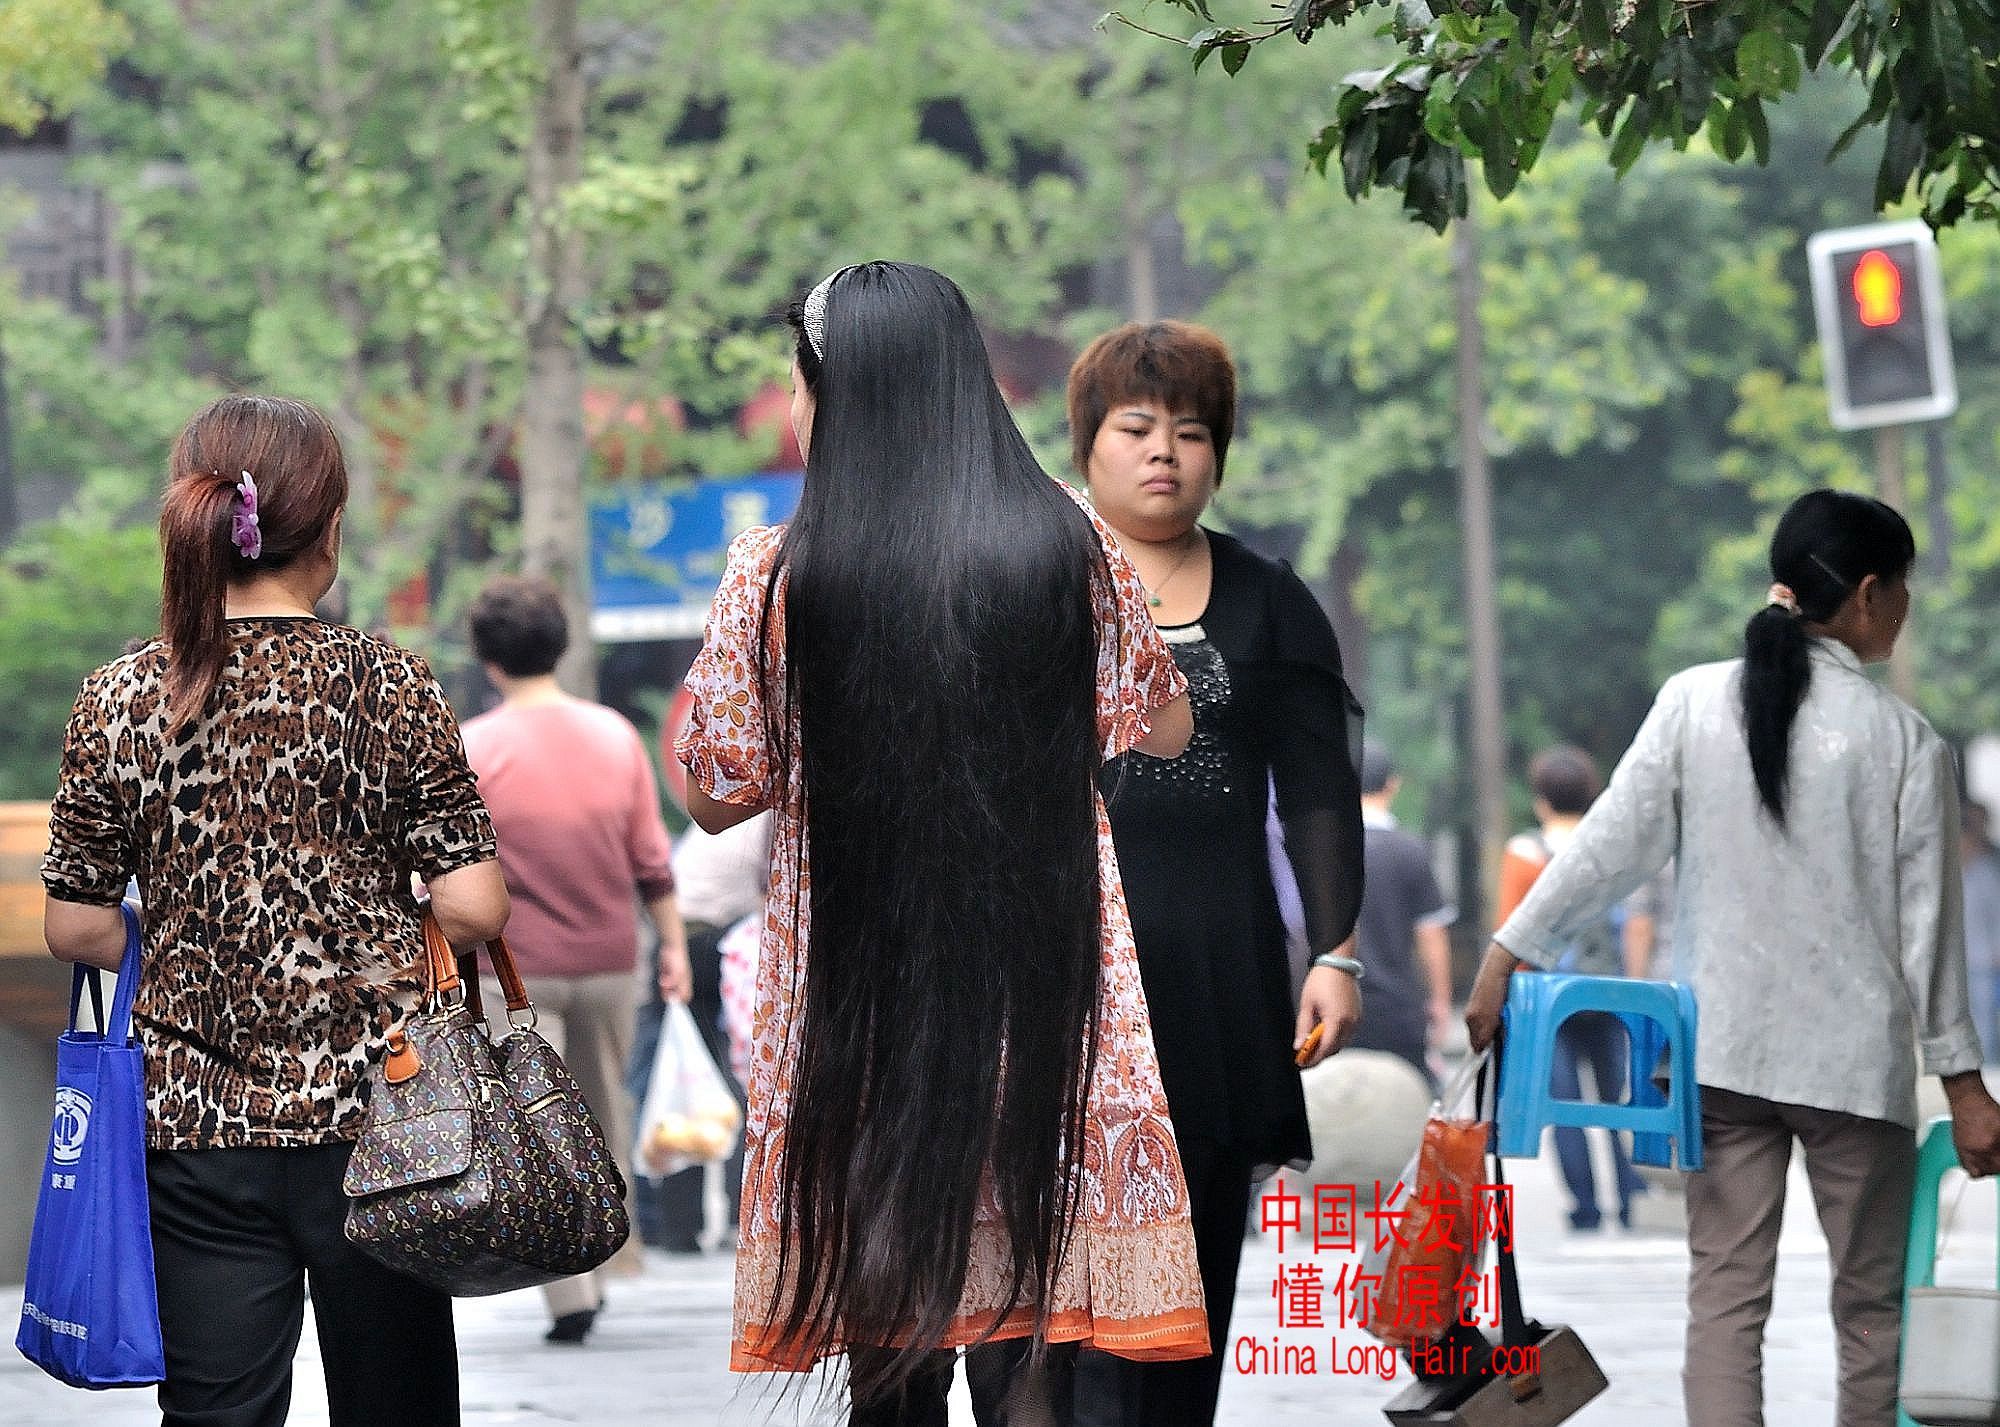 Streetshot of knee length long hair by dongni